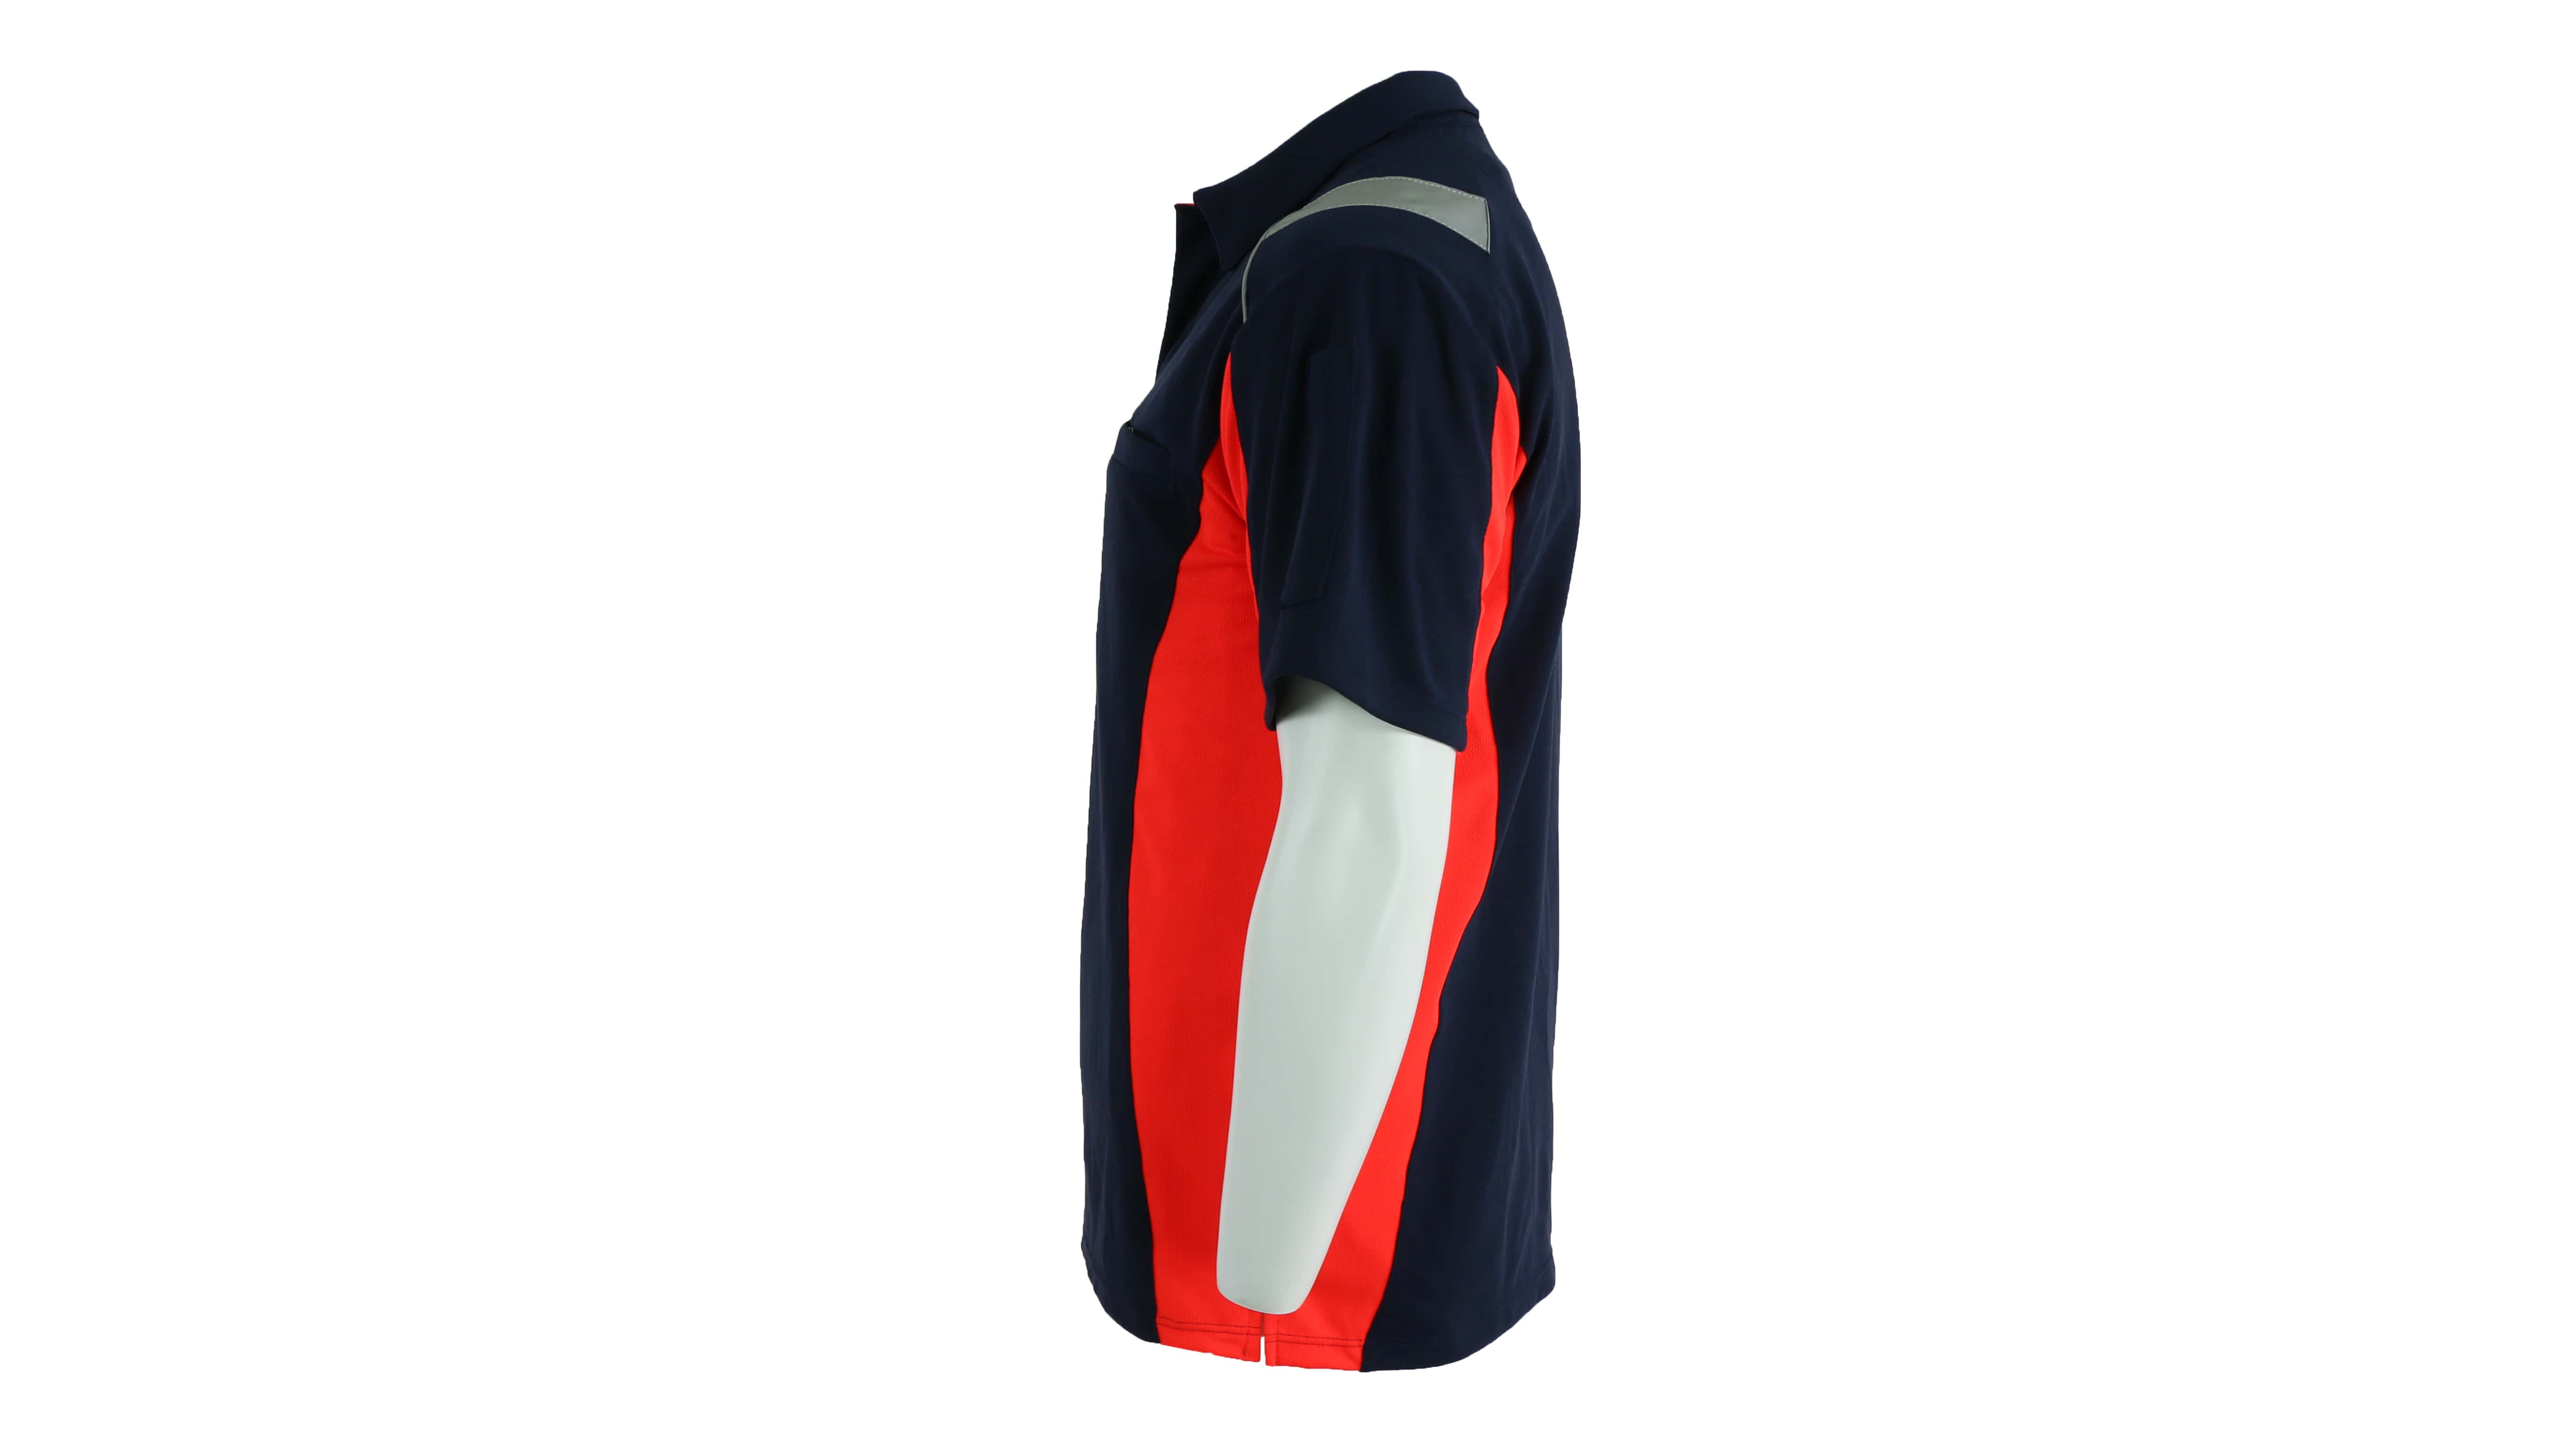 Rescuewear Poloshirt kurze Ärmel Dynamic Marineblau / Neon Rot - 3XL